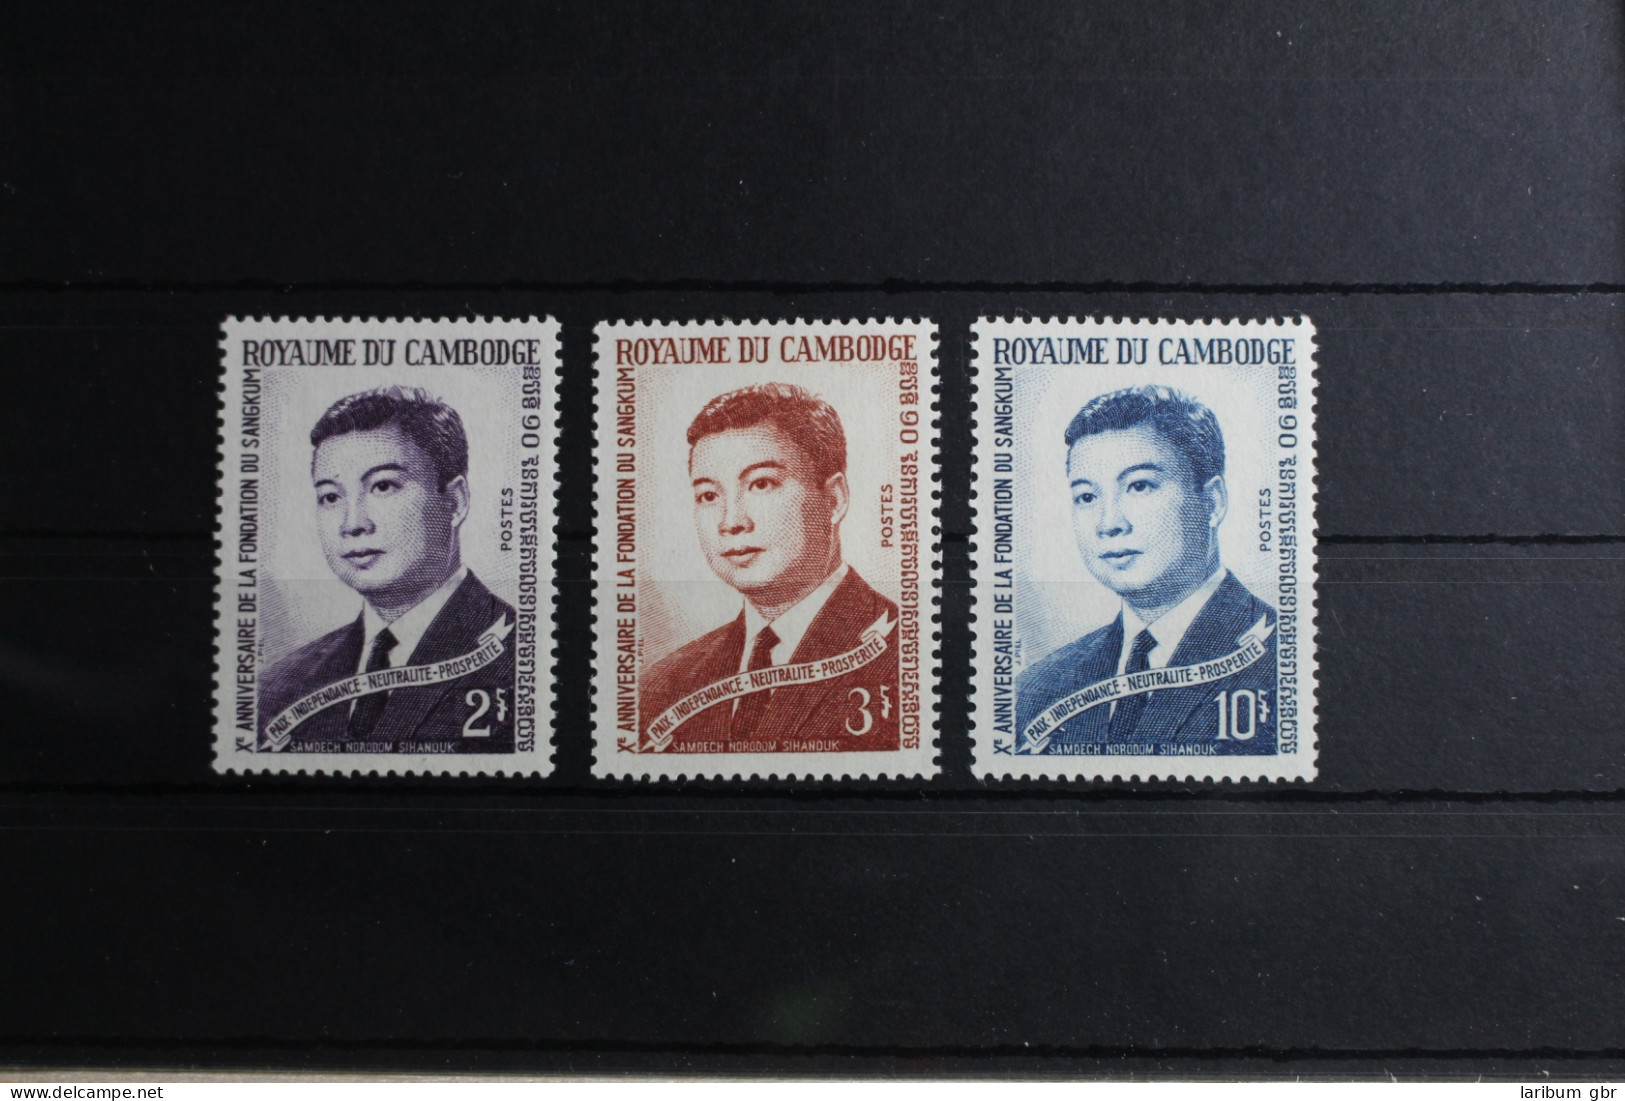 Kambodscha 181-183 Postfrisch #RU594 - Cambodja